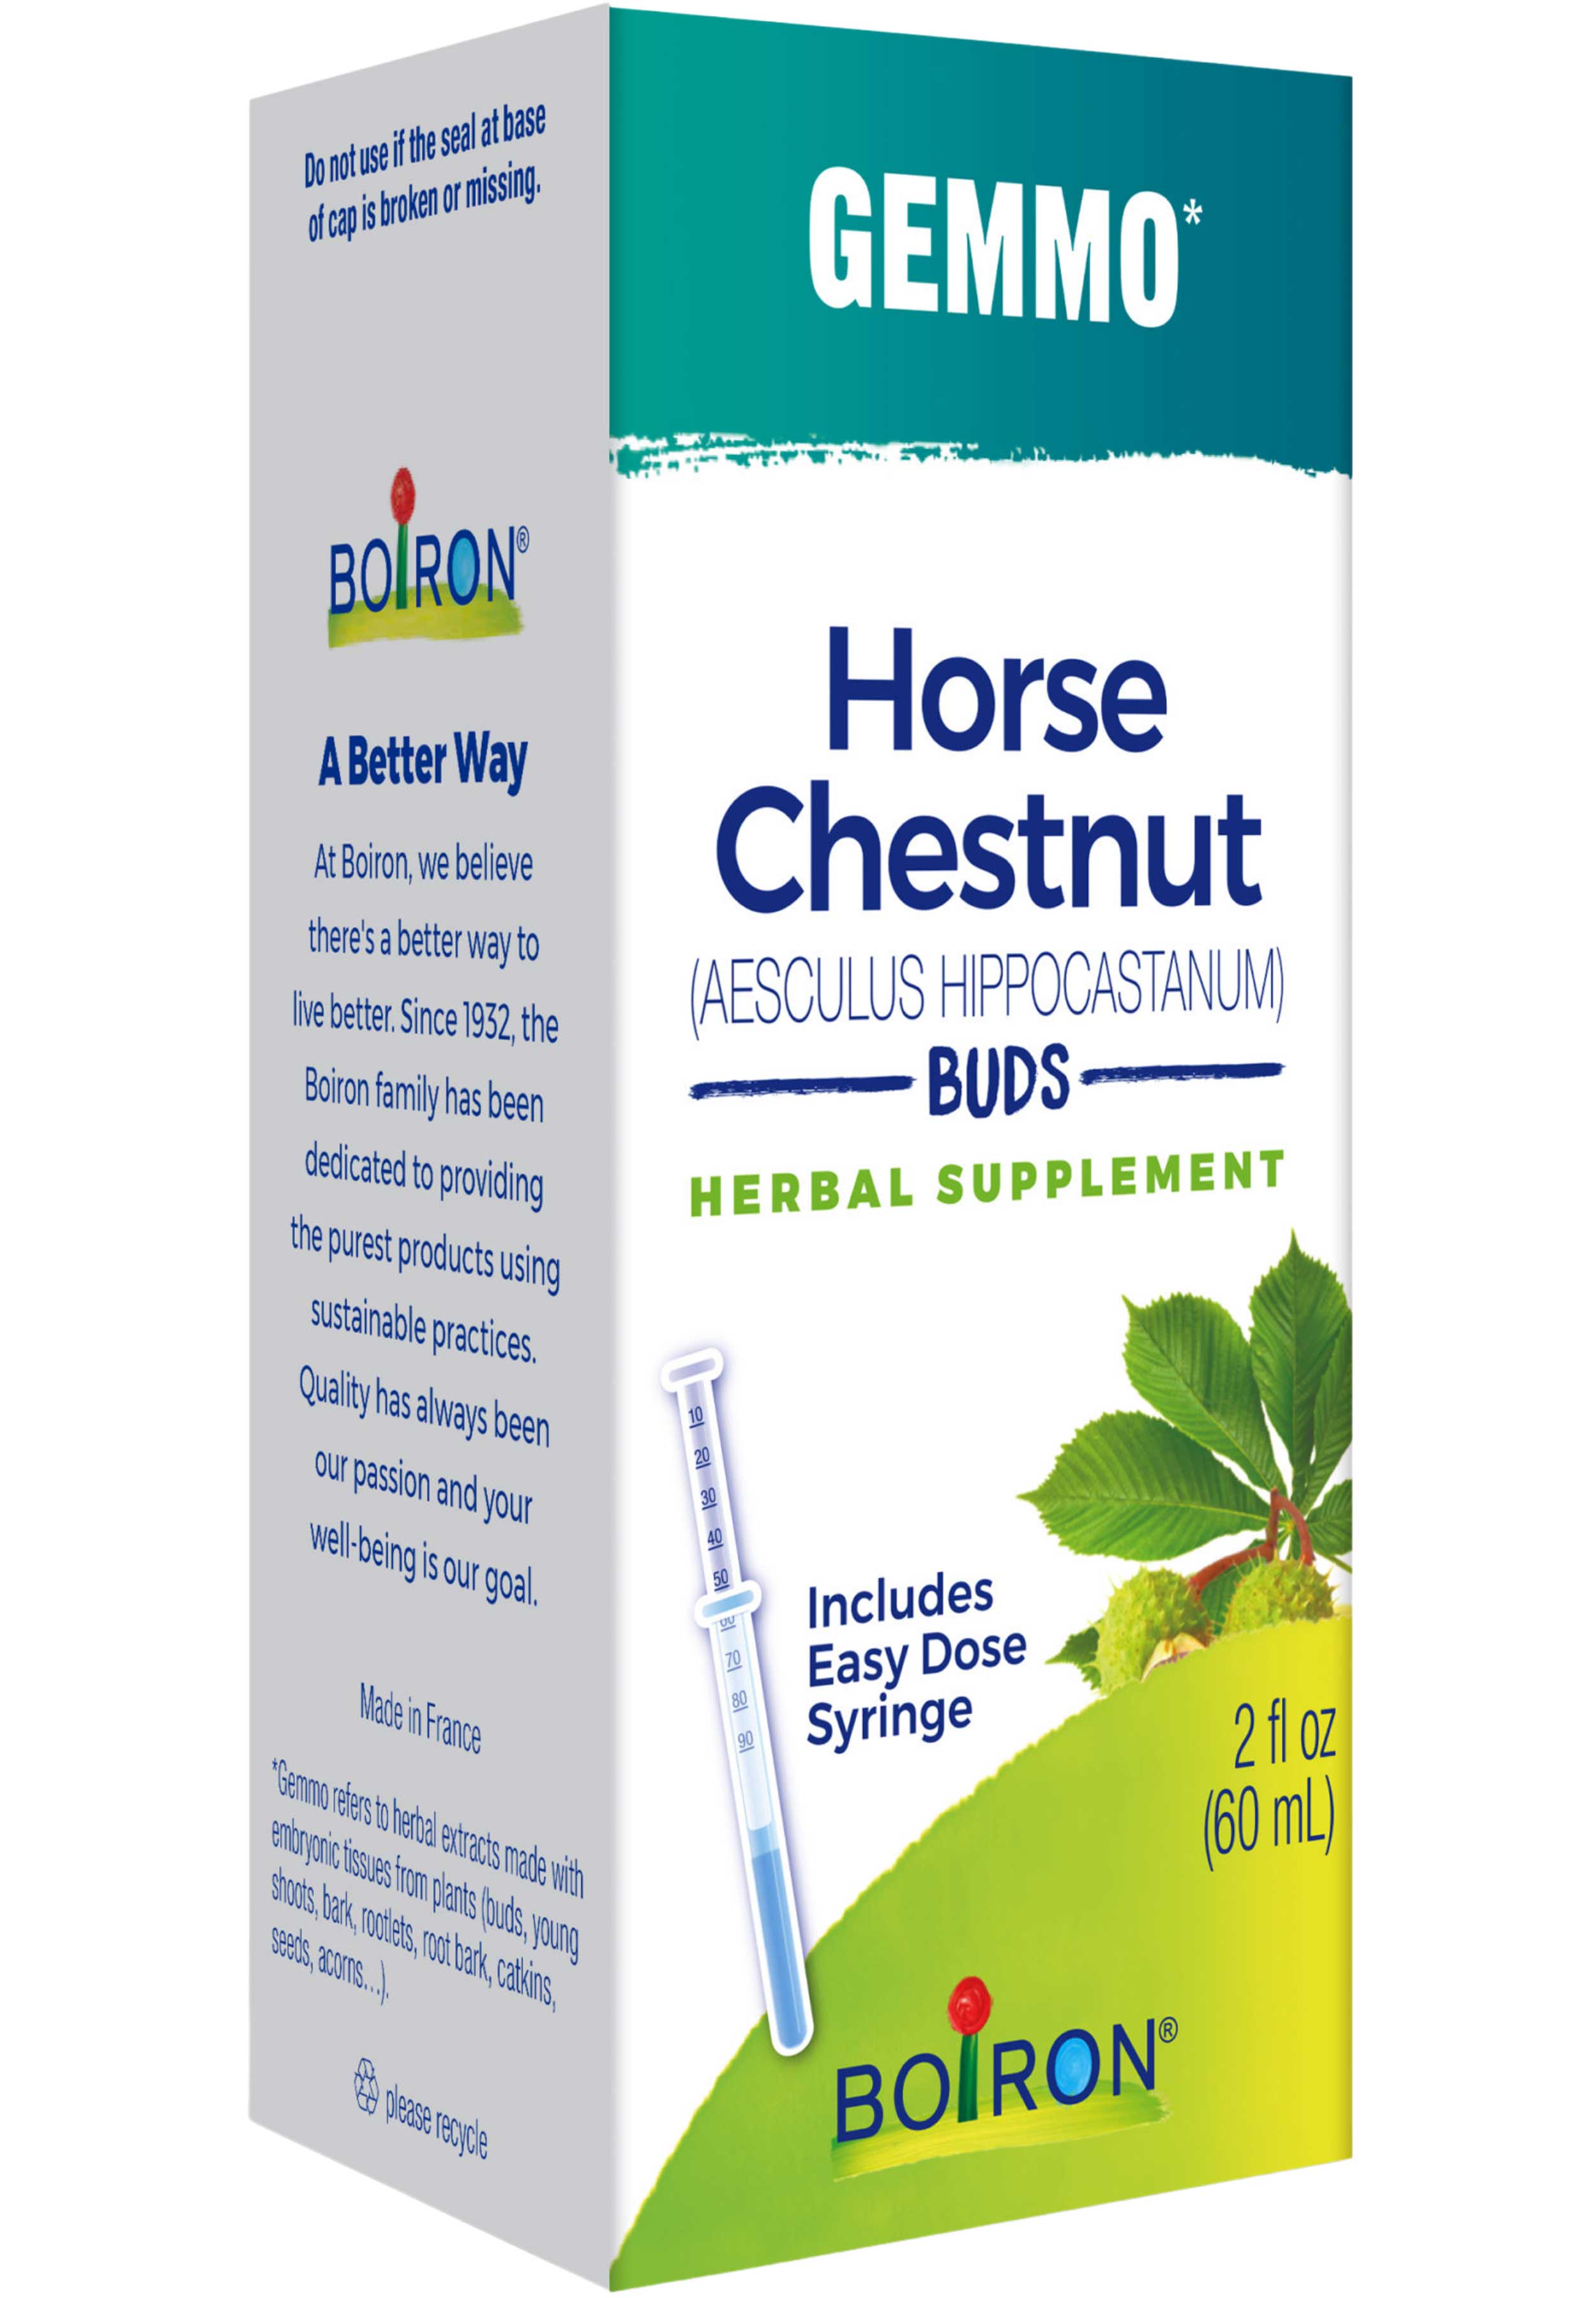 Boiron Homeopathics Gemmo Horse Chestnut Buds